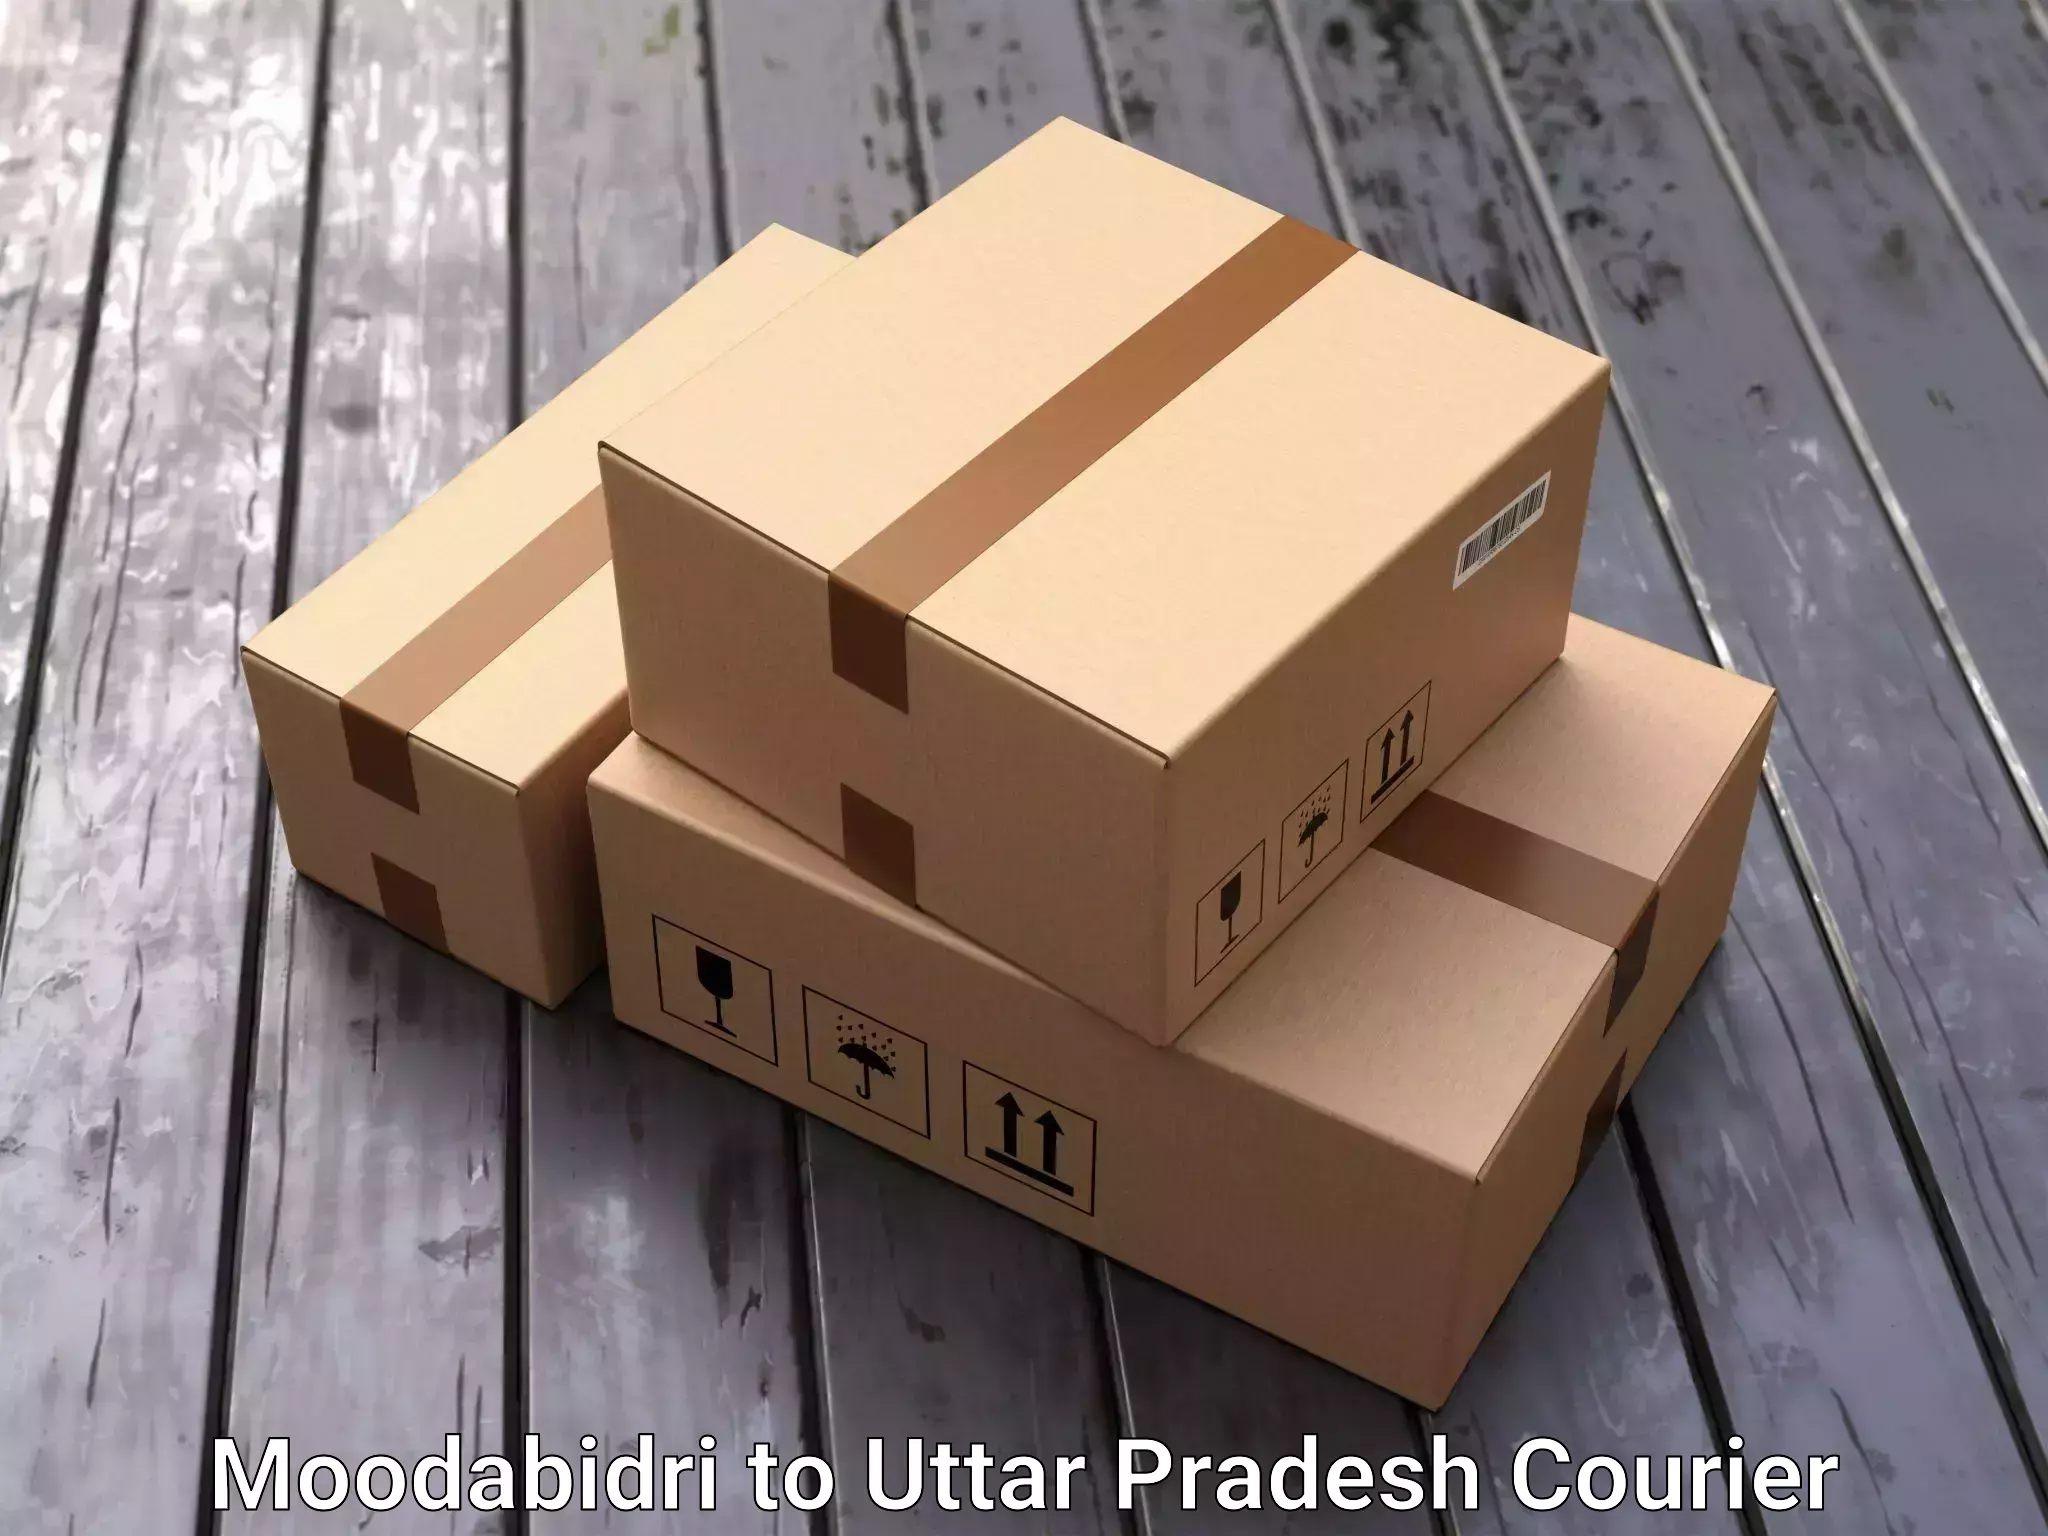 Professional moving company Moodabidri to Kulpahar